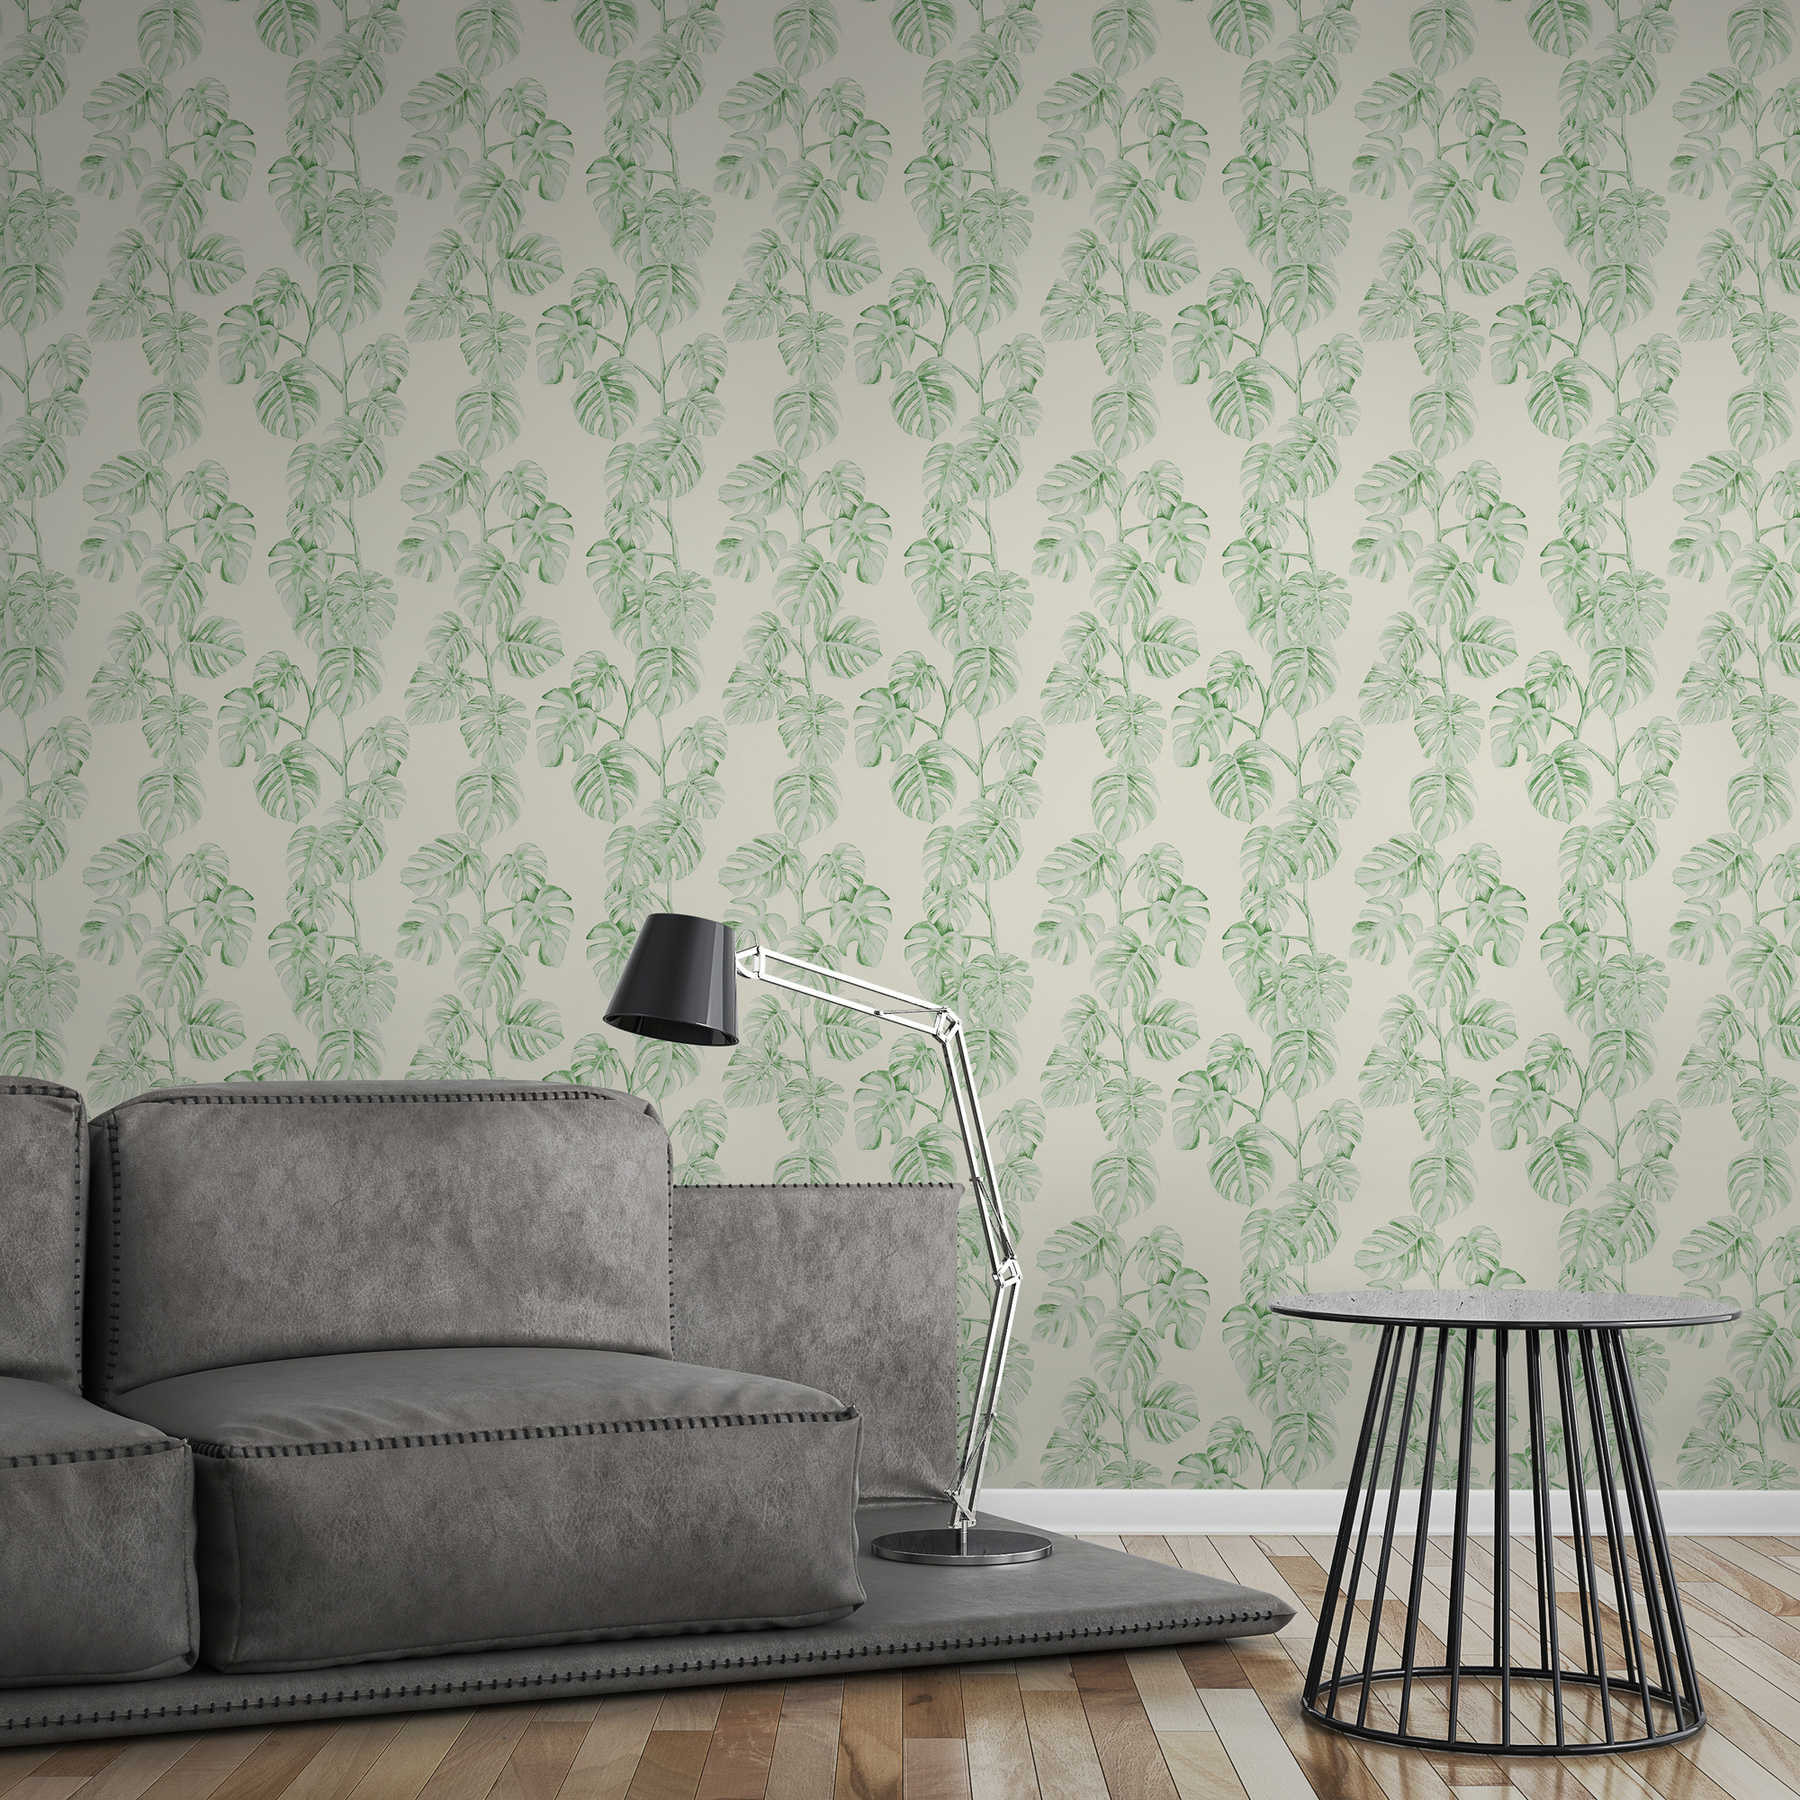             Non-woven wallpaper monstera vines, natural pattern - green, white
        